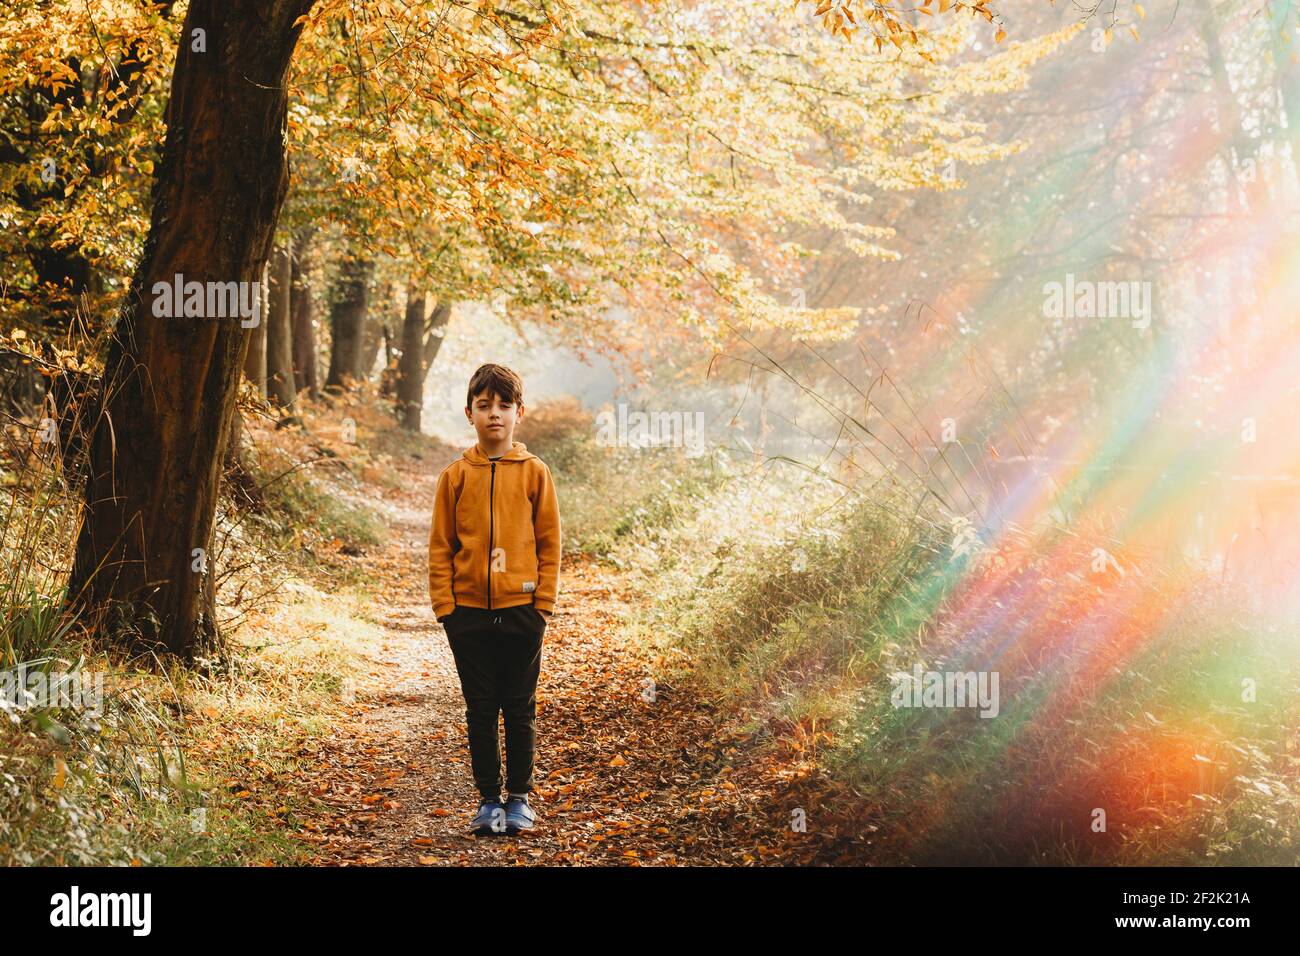 Boy standing on path under tree with rainbow light flare Stock Photo